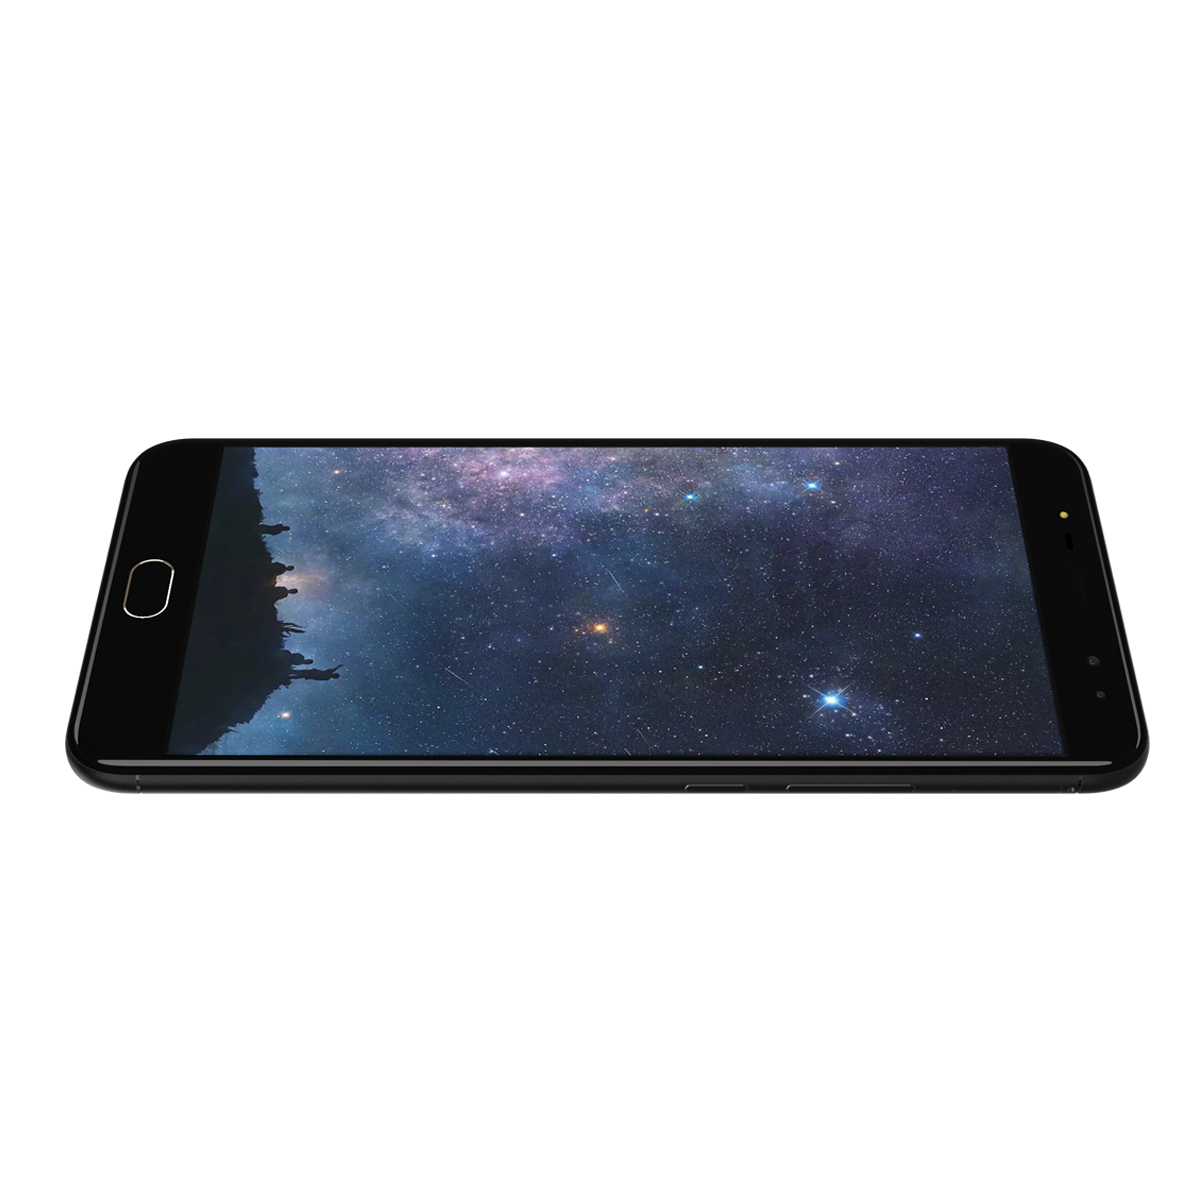 New arrival UHANS Max 2 6.44 inch FHD 4G Smartphone 4GB RAM 64GB ROM